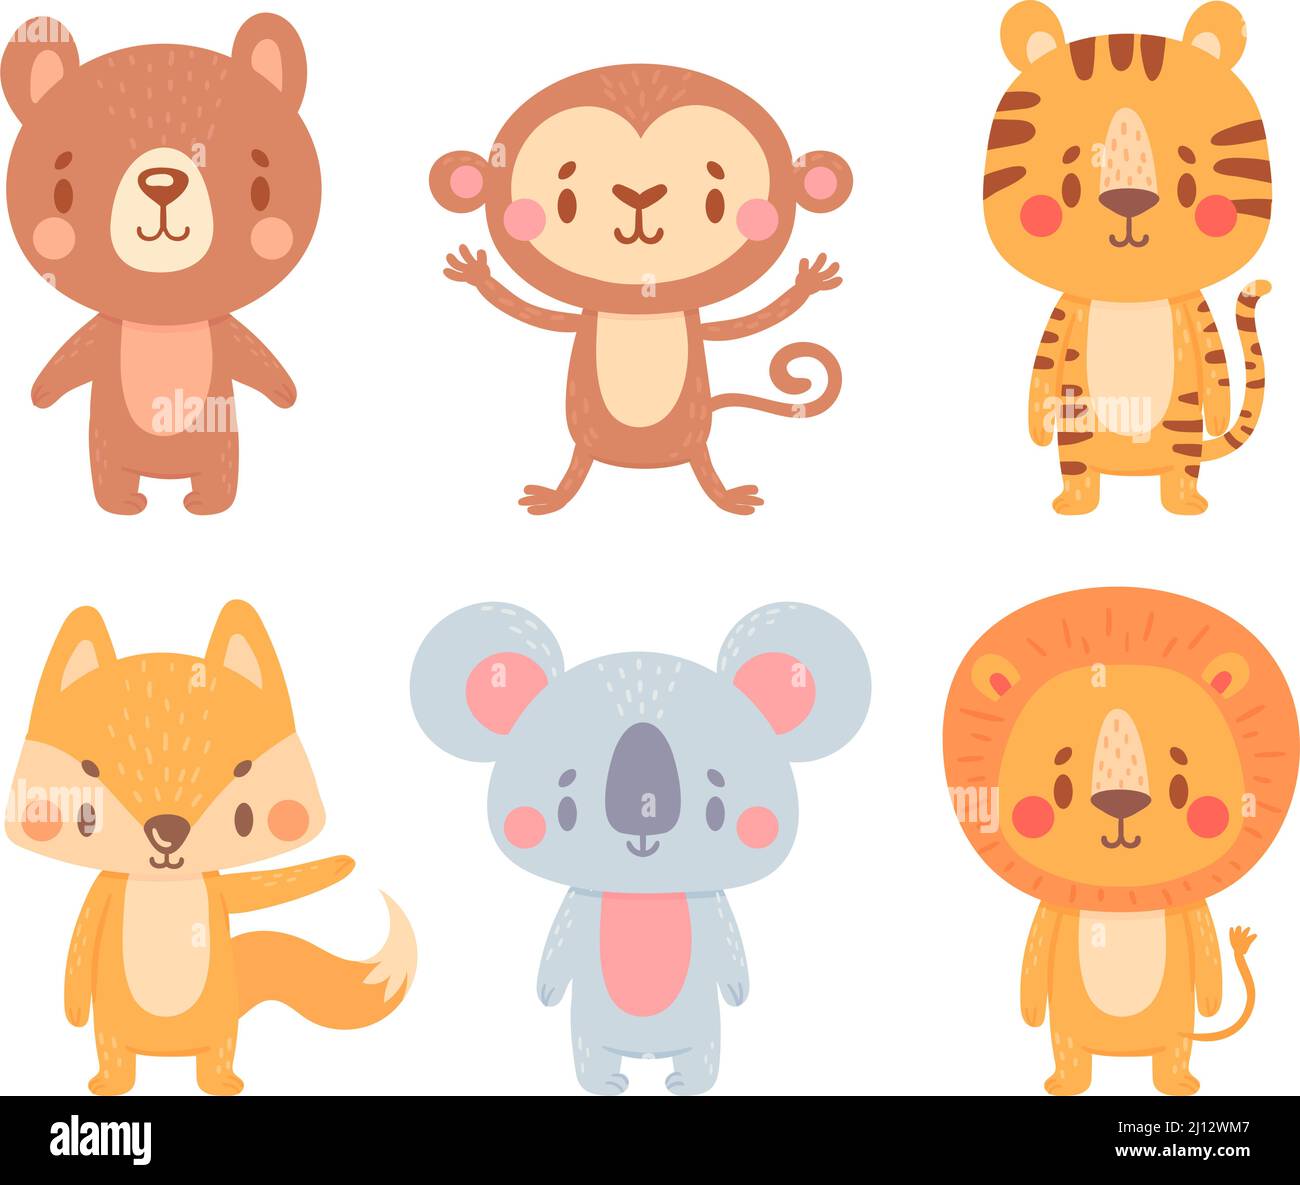 Cute cartoon animals. Wild adorable characters with smiling faces. Cartoon cute bear, monkey, tiger, fox, koala and lion Stock Vector